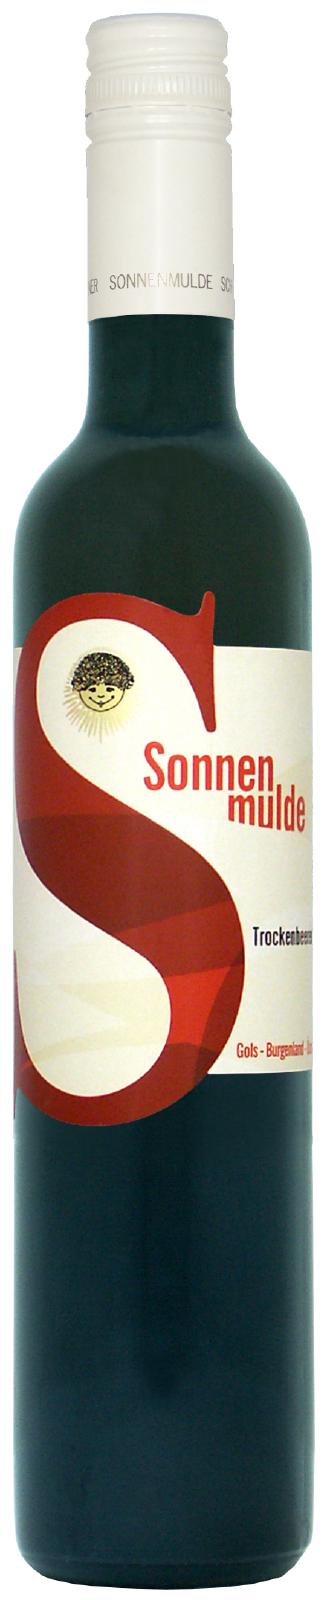 A bottle of Trockenbeerenauslese